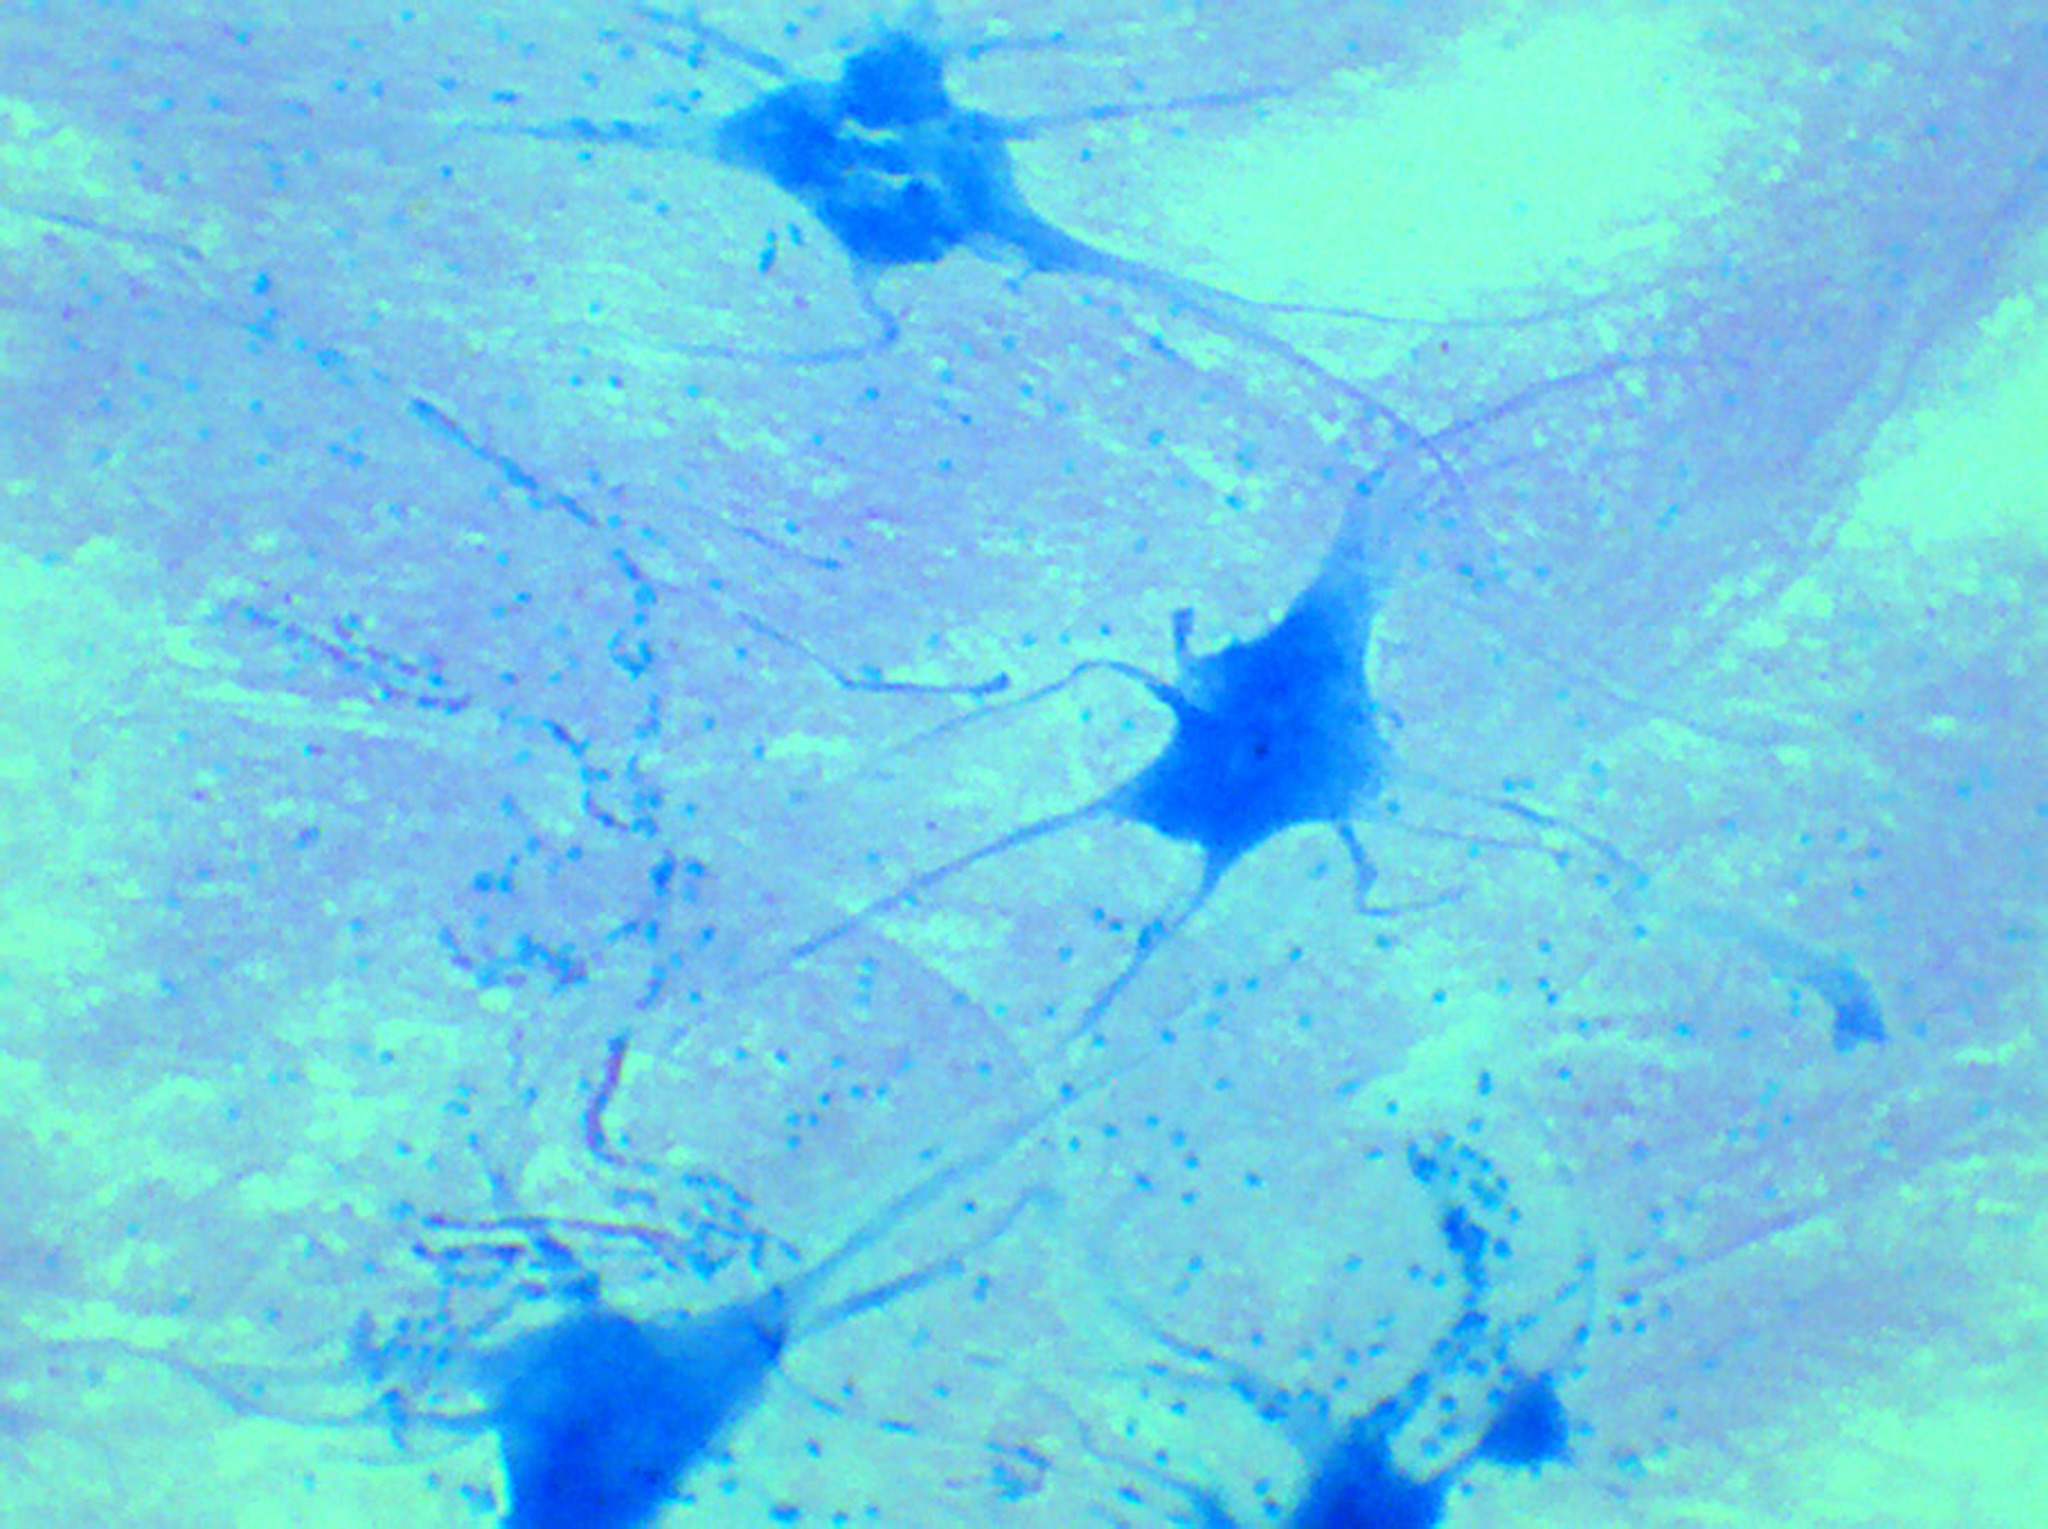 Giant Multipolar Neurons Smear Nerve Tissue (Neurons) 400x, Light ...